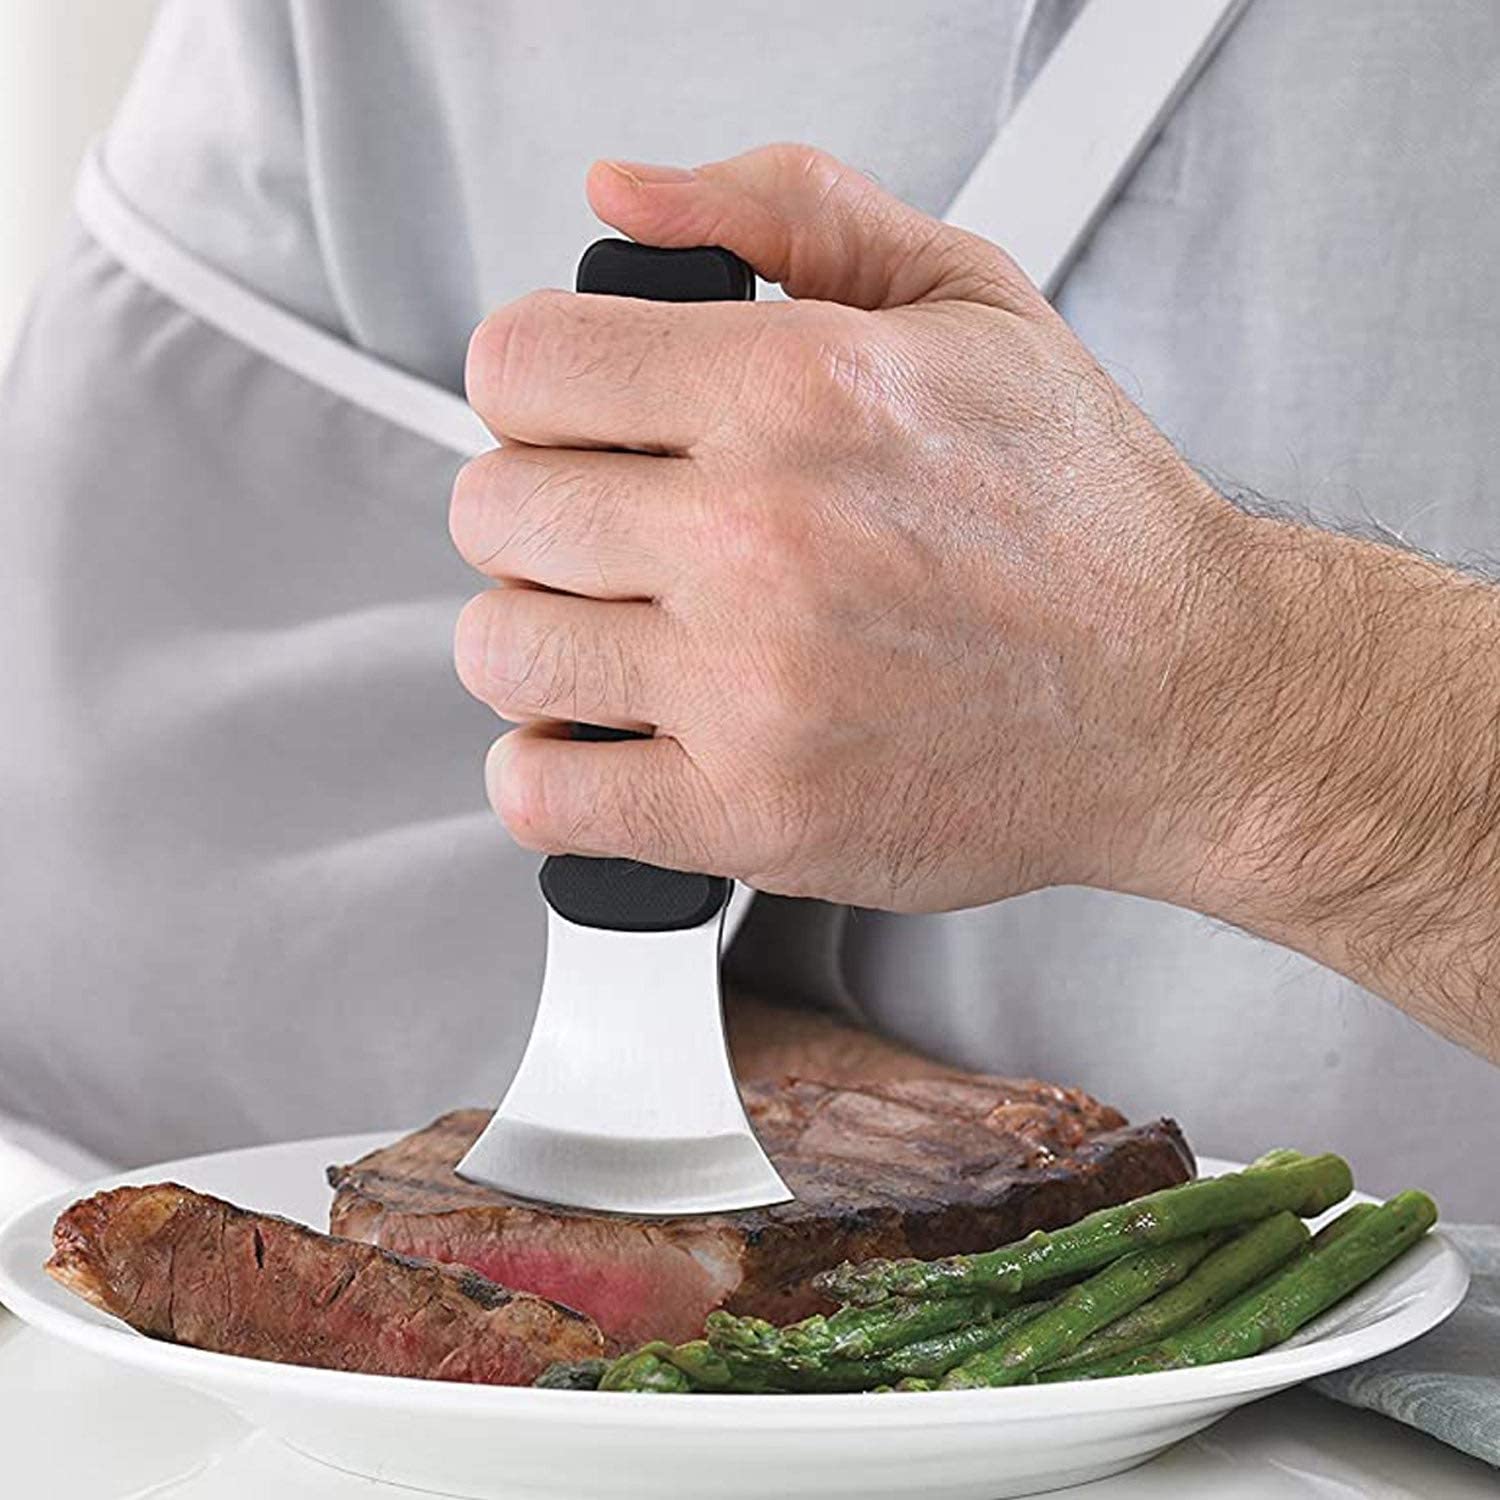 an adaptive knife for making steak cutting easier